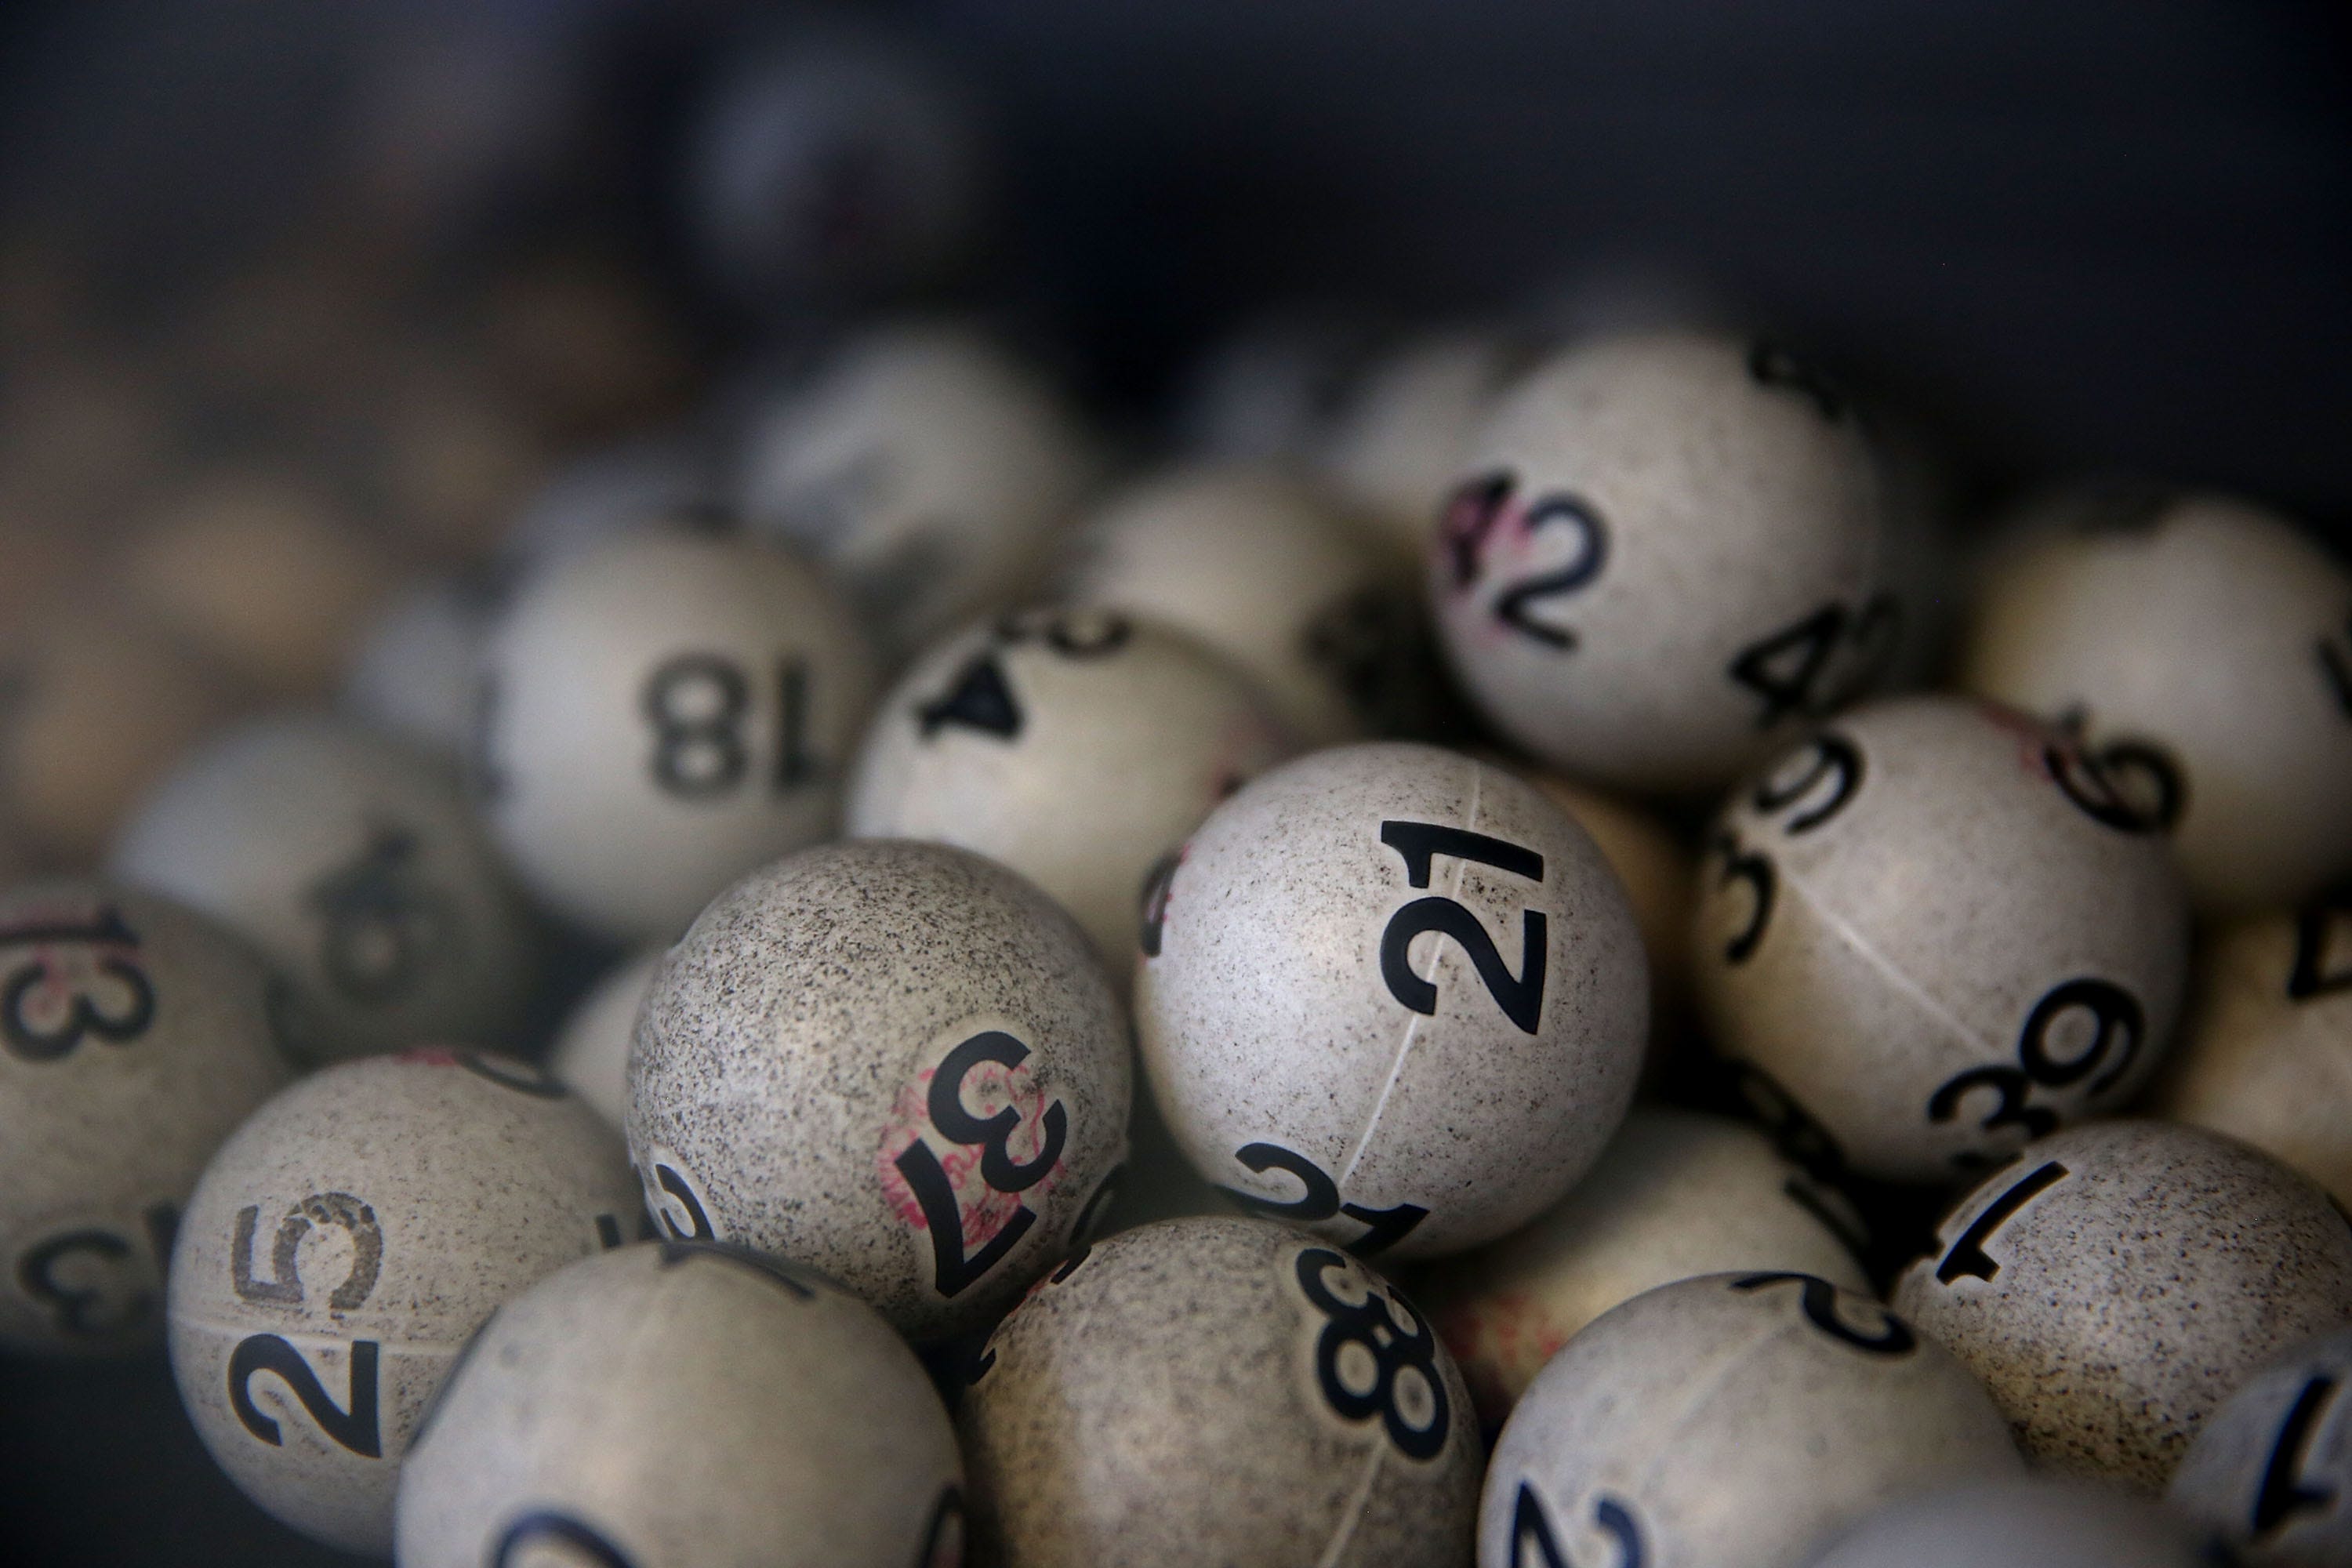 Where's California's $2 billion Powerball lottery winner?